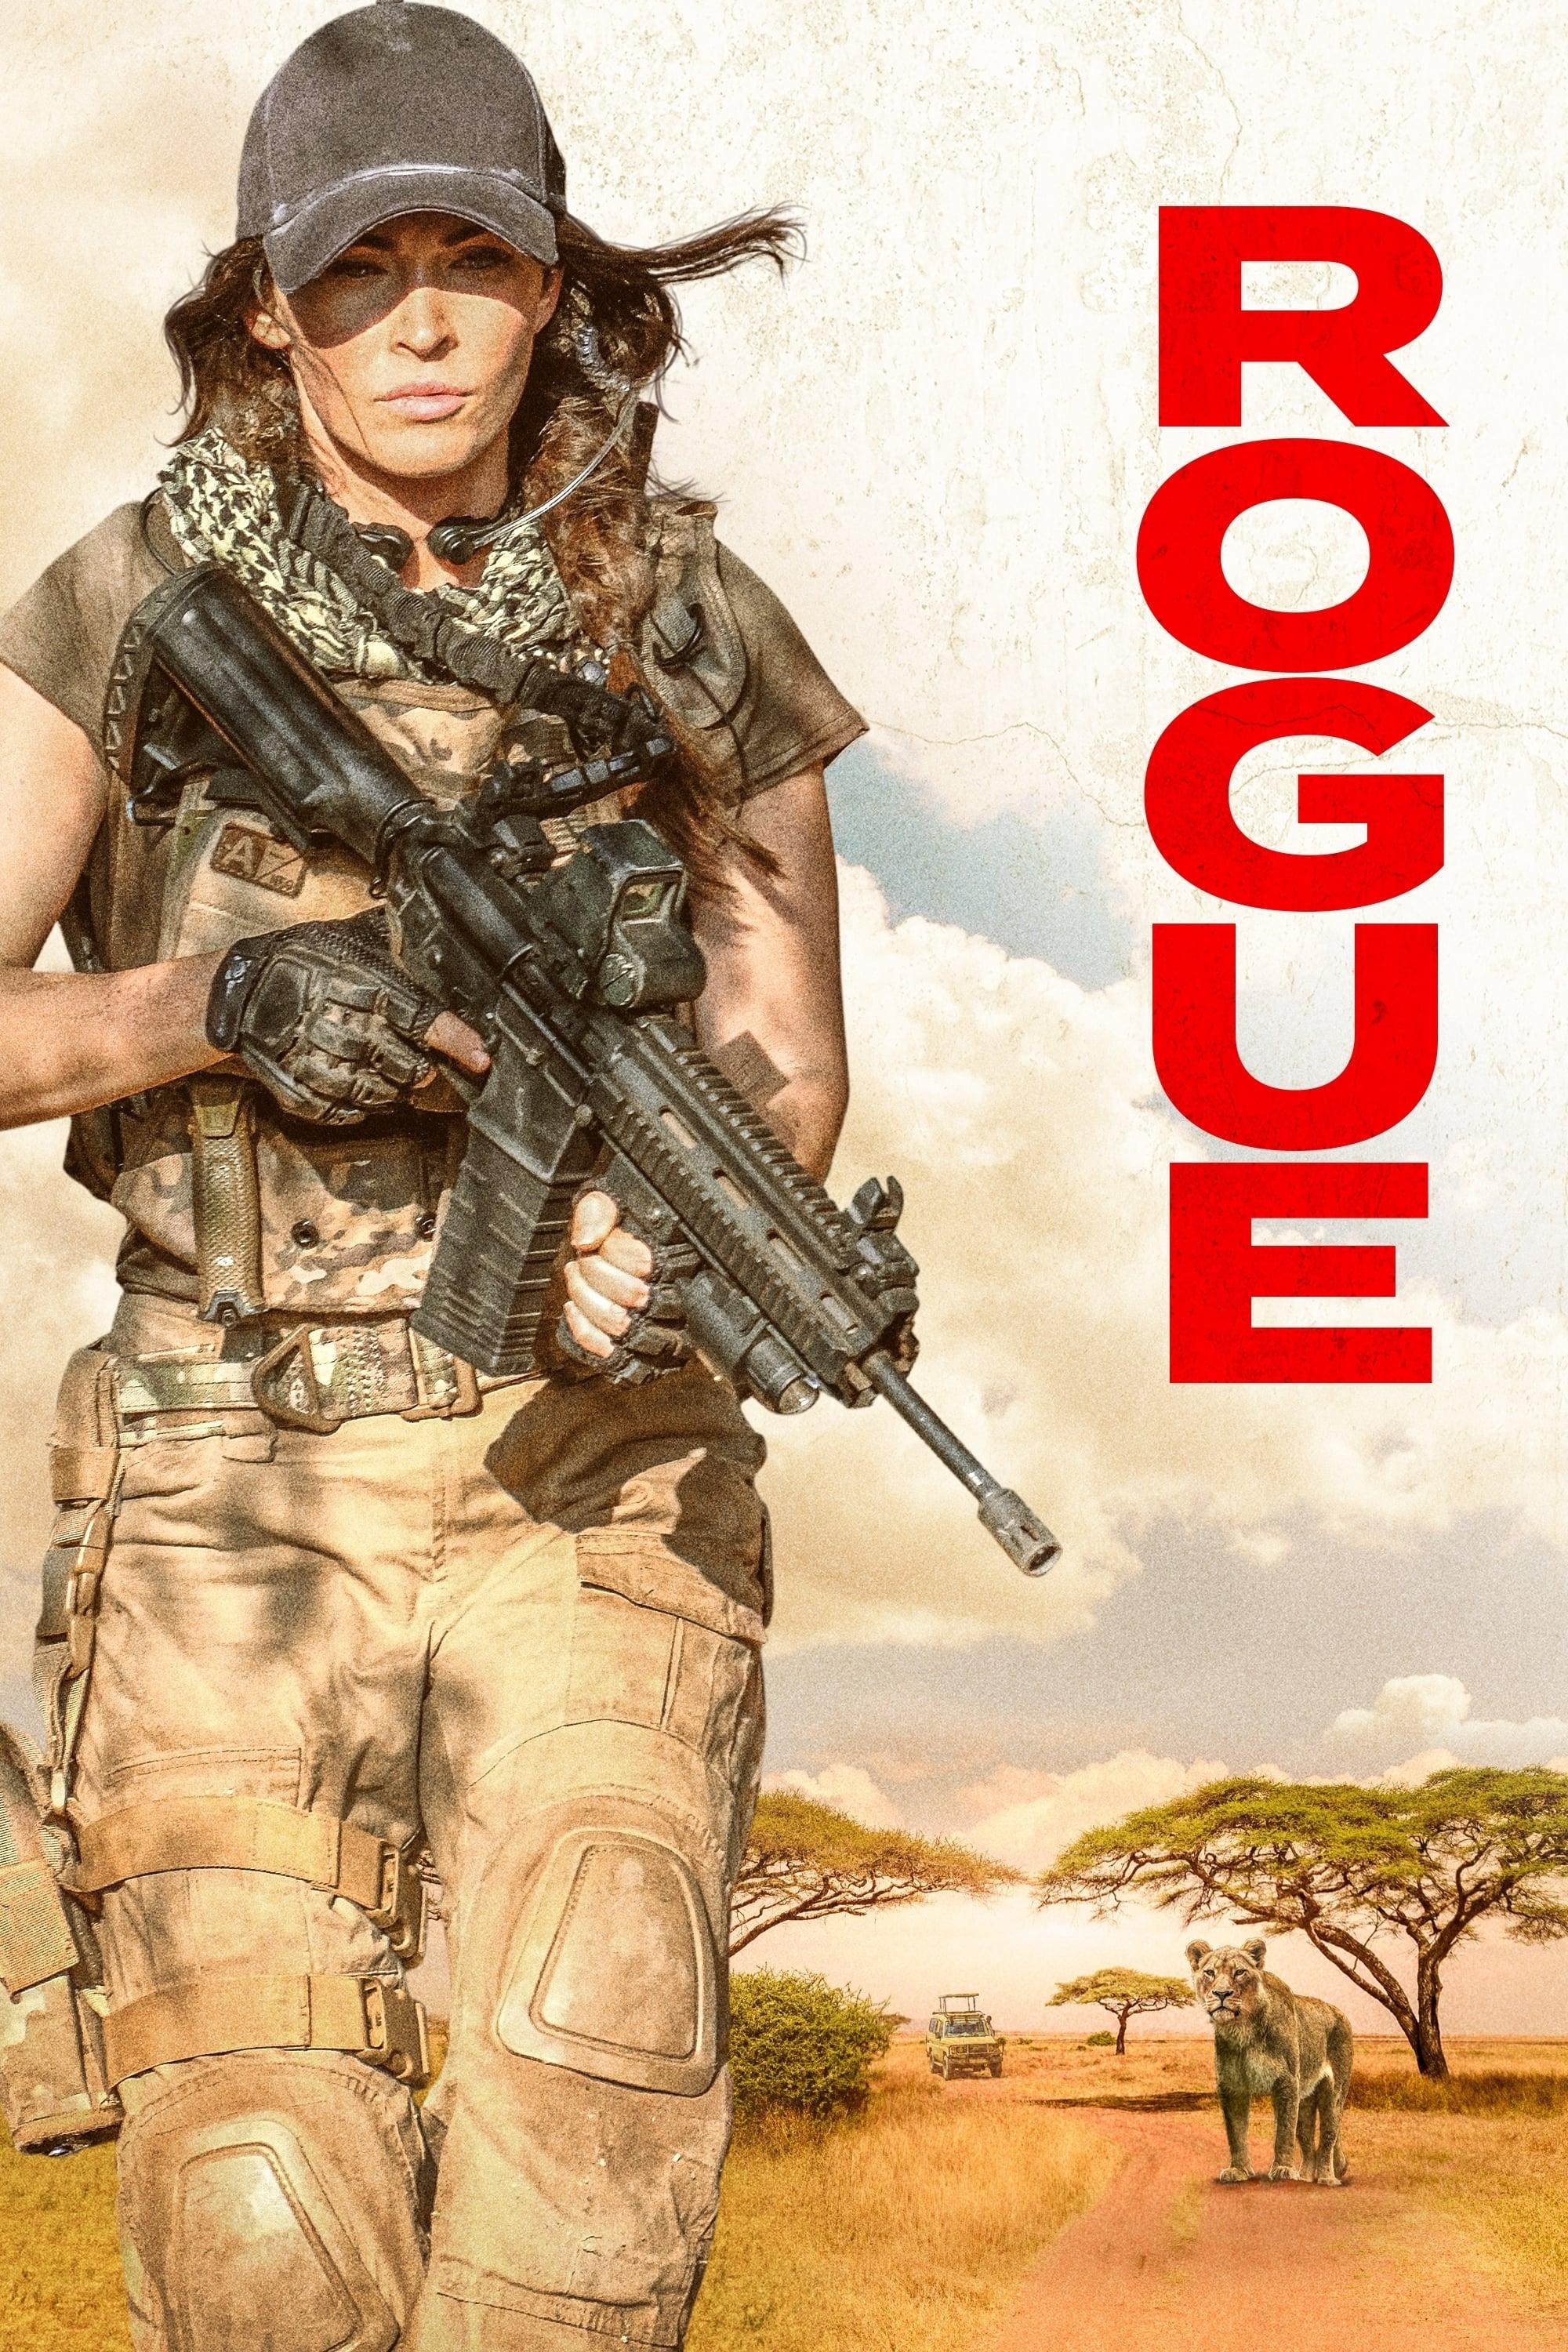 Rogue poster